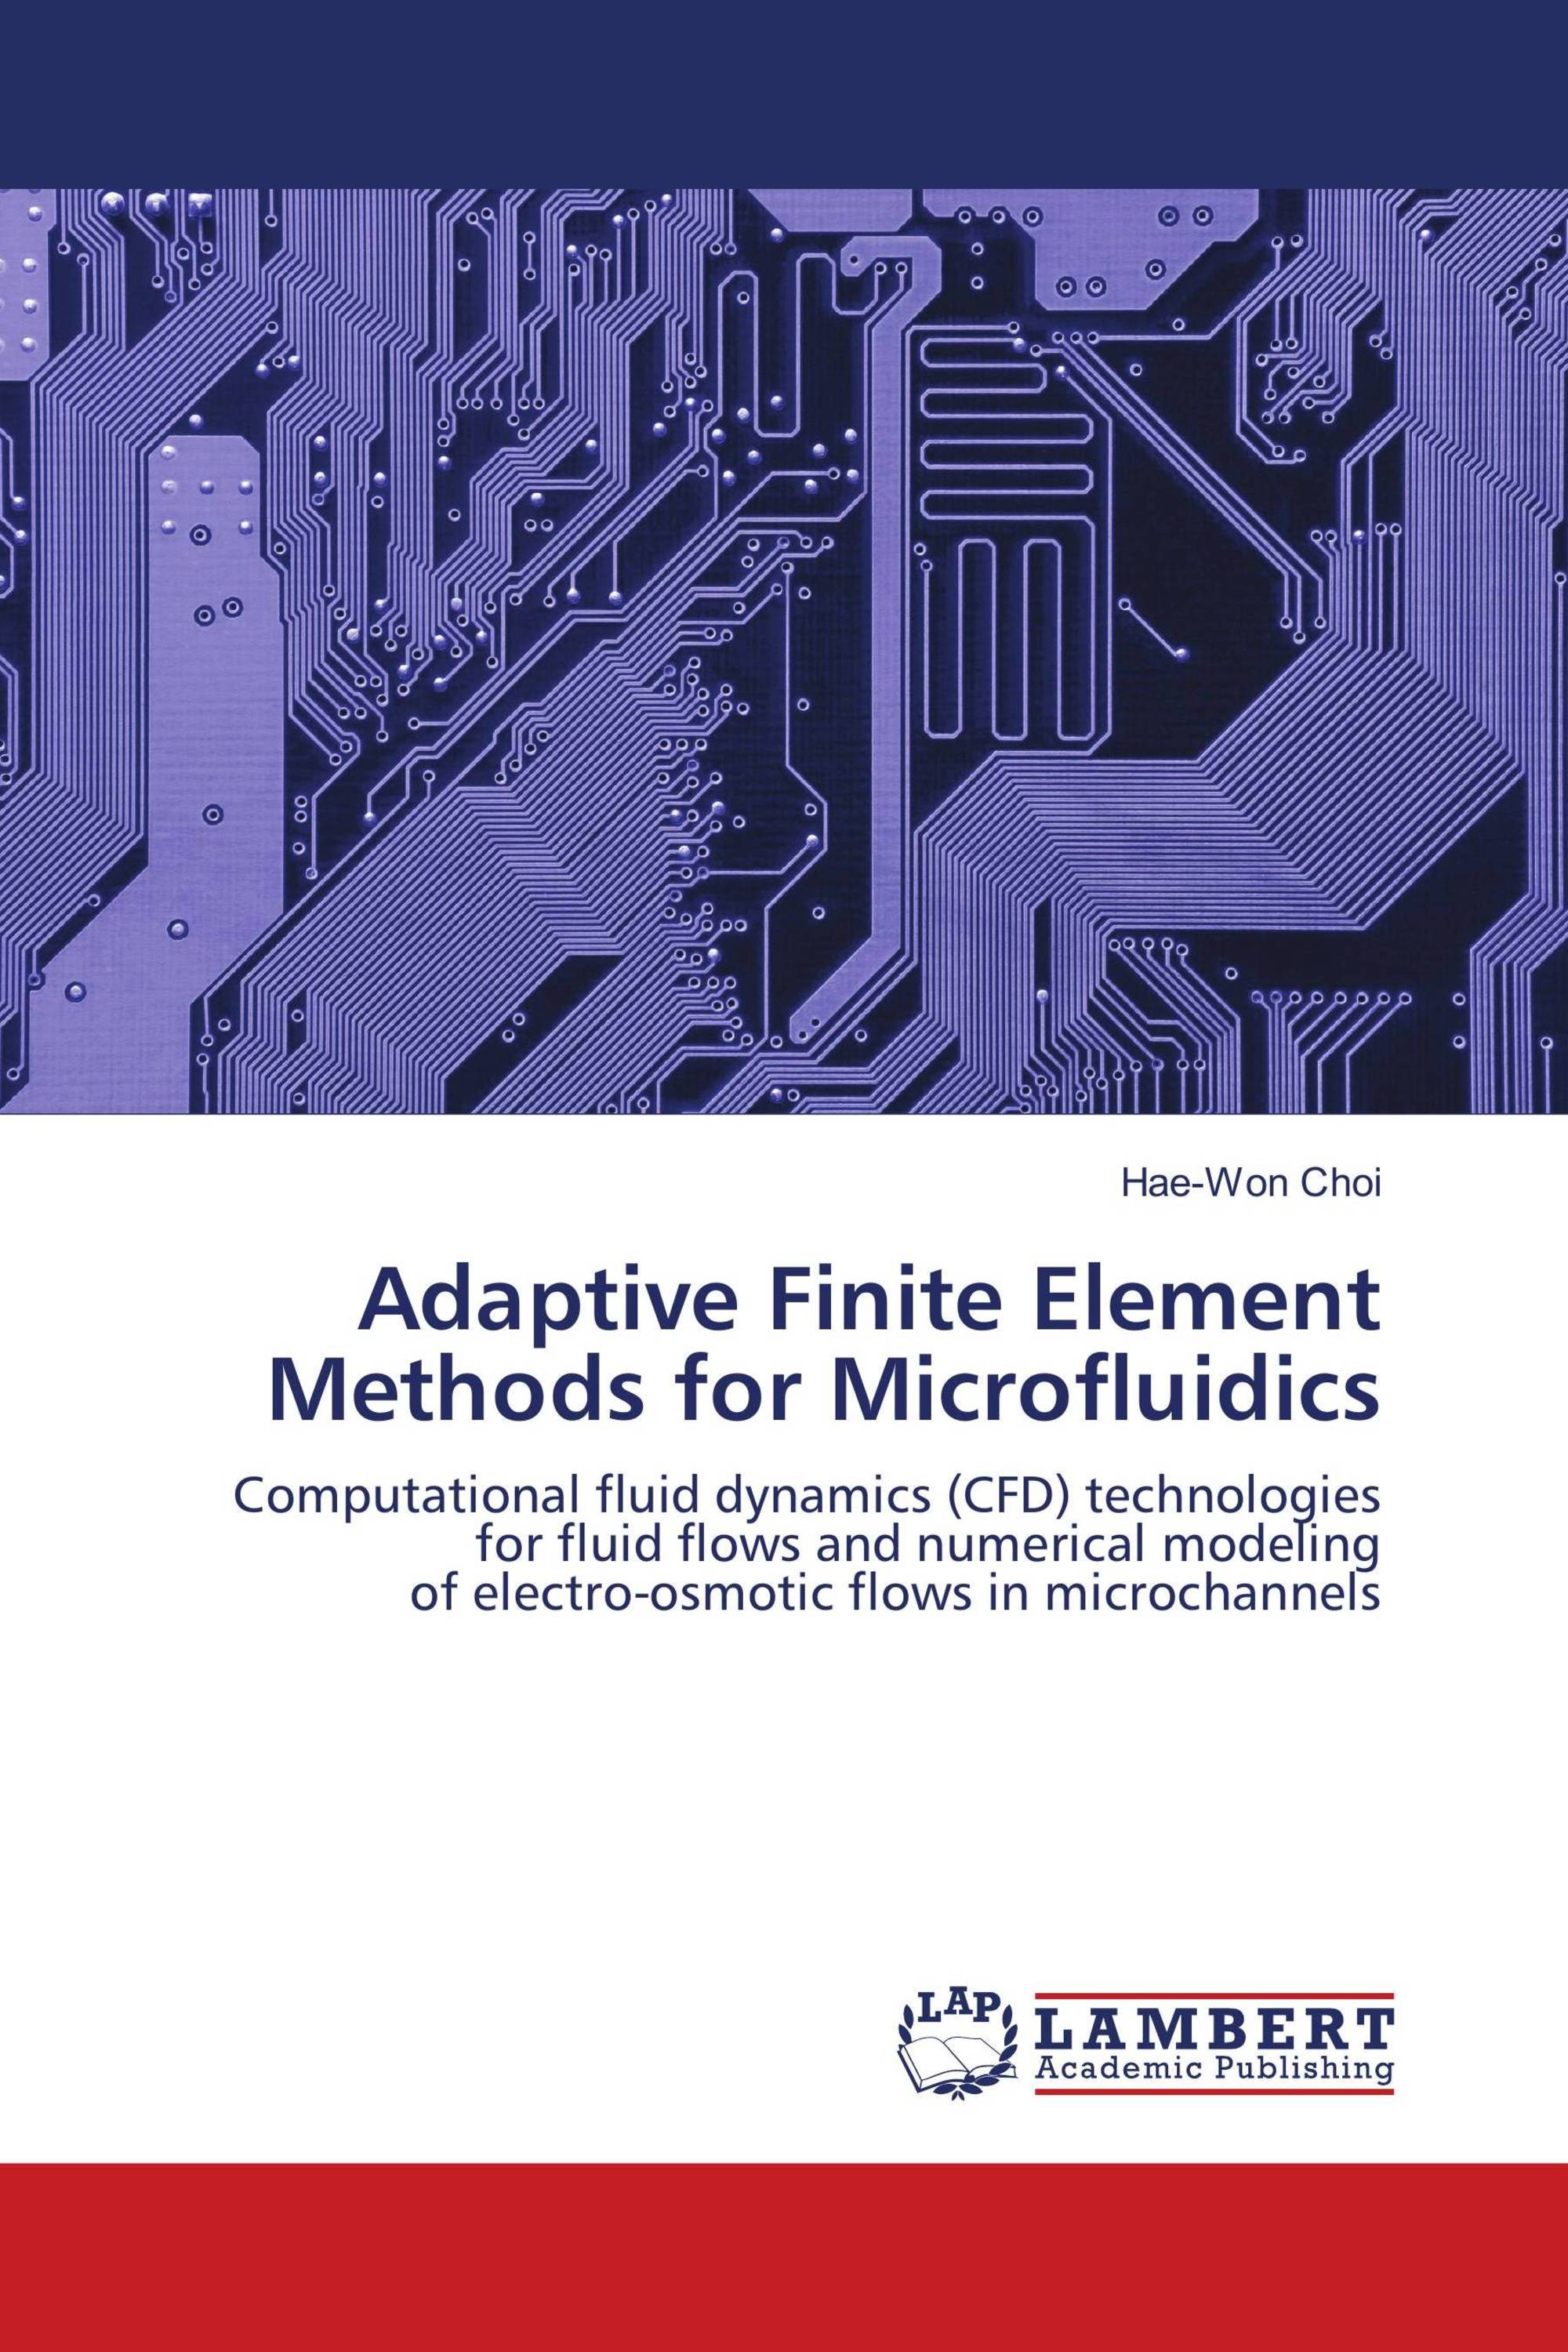 Adaptive Finite Element Methods for Microfluidics